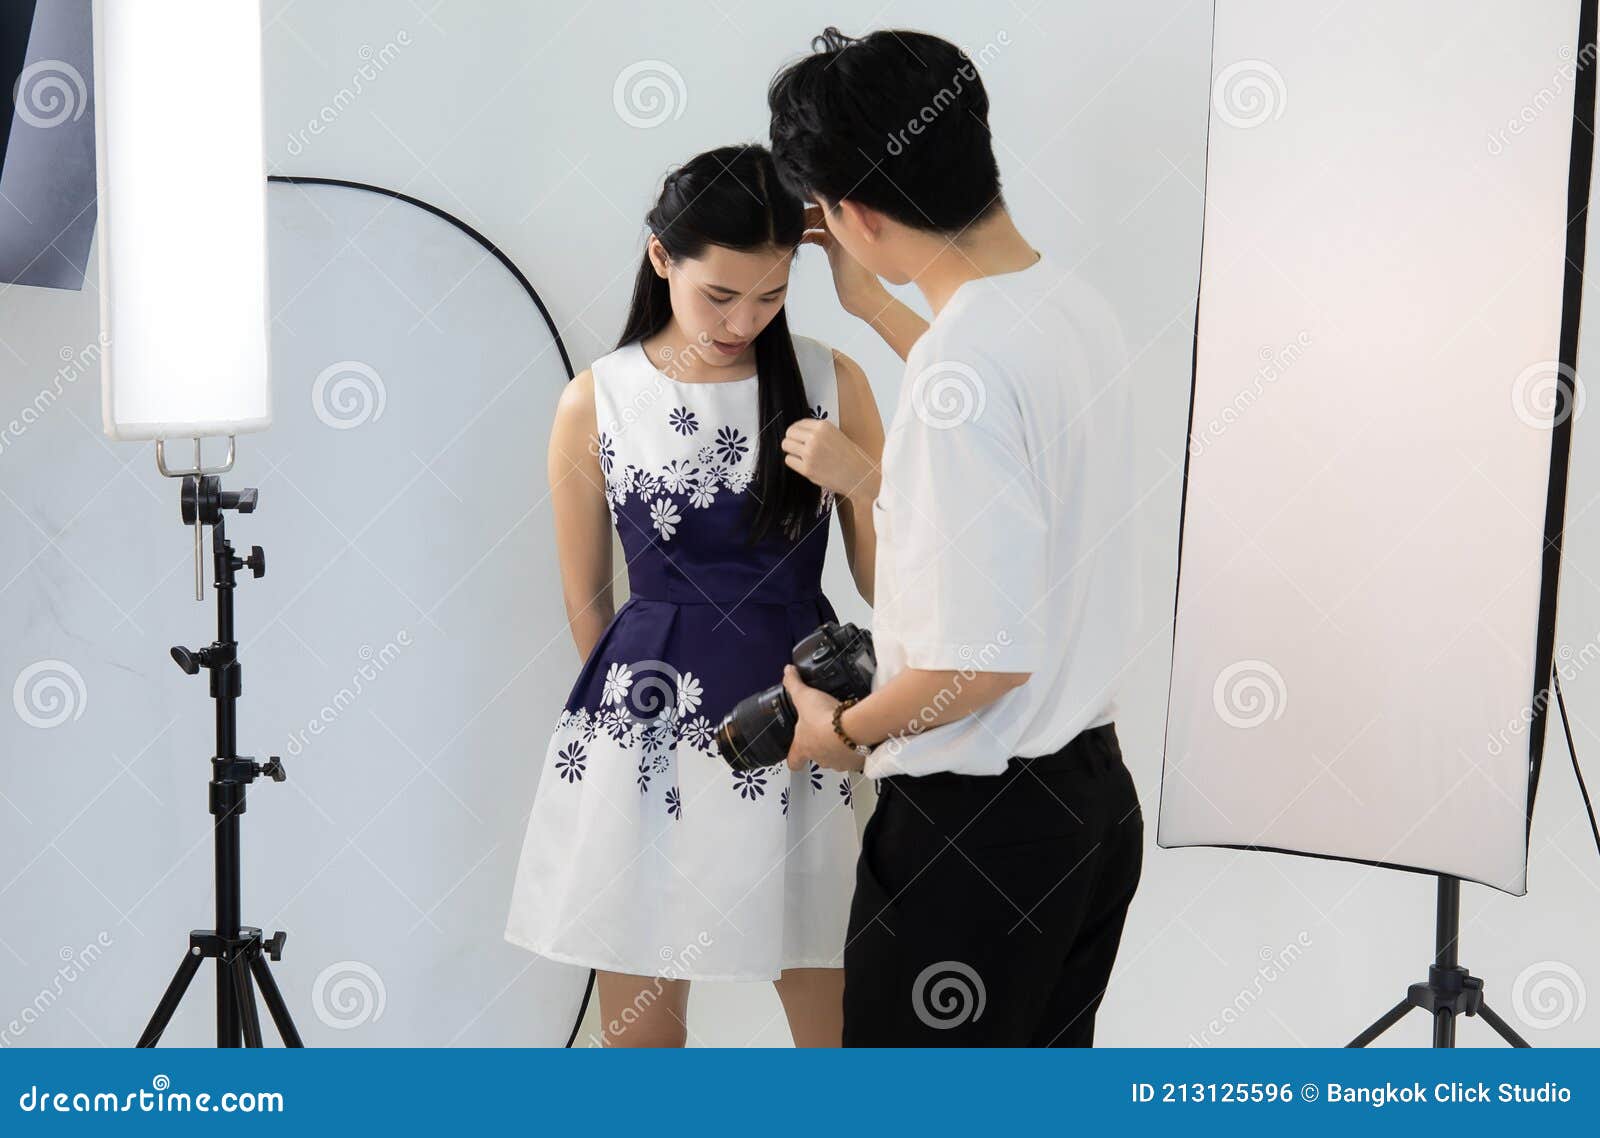 cool naina share asian women flashing photos